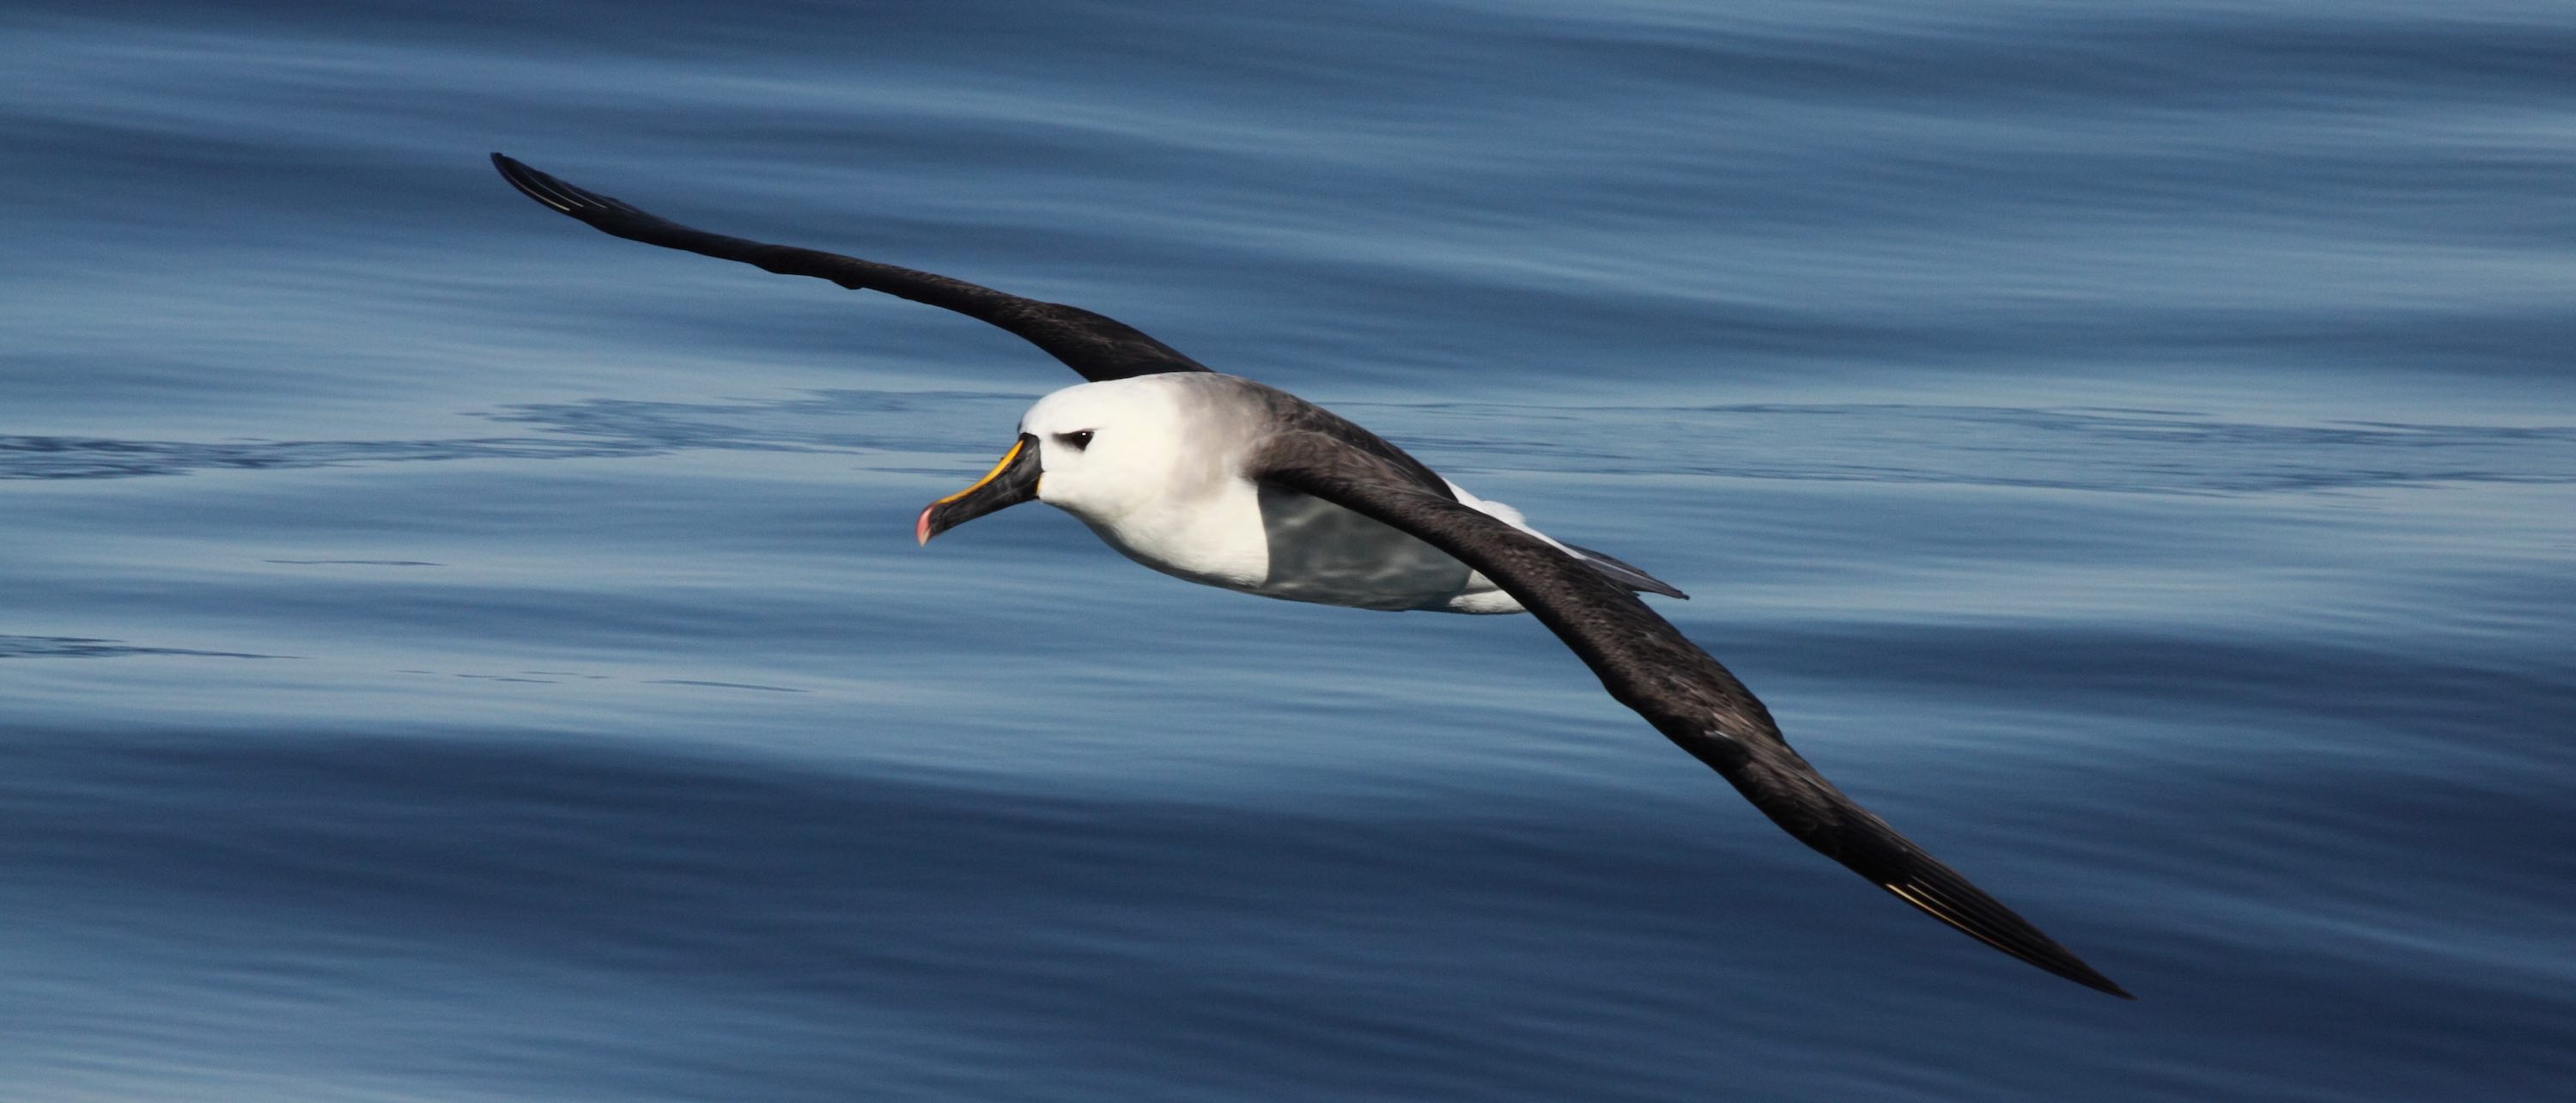 An albatross glides close to the ocean surface.